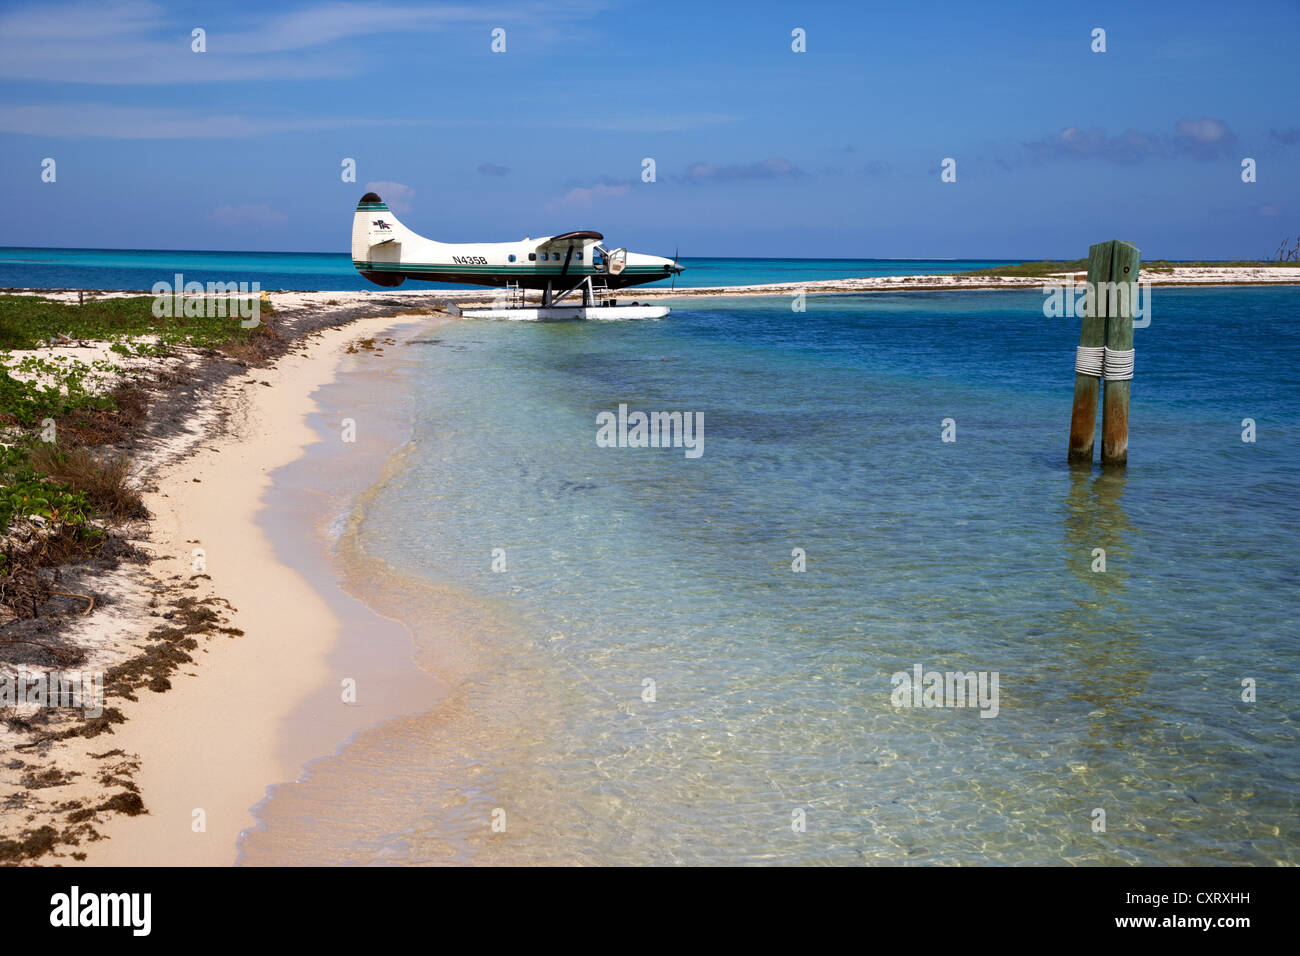 dehaviland dhc-3 otter seaplane on the beach at the dry tortugas florida keys usa Stock Photo